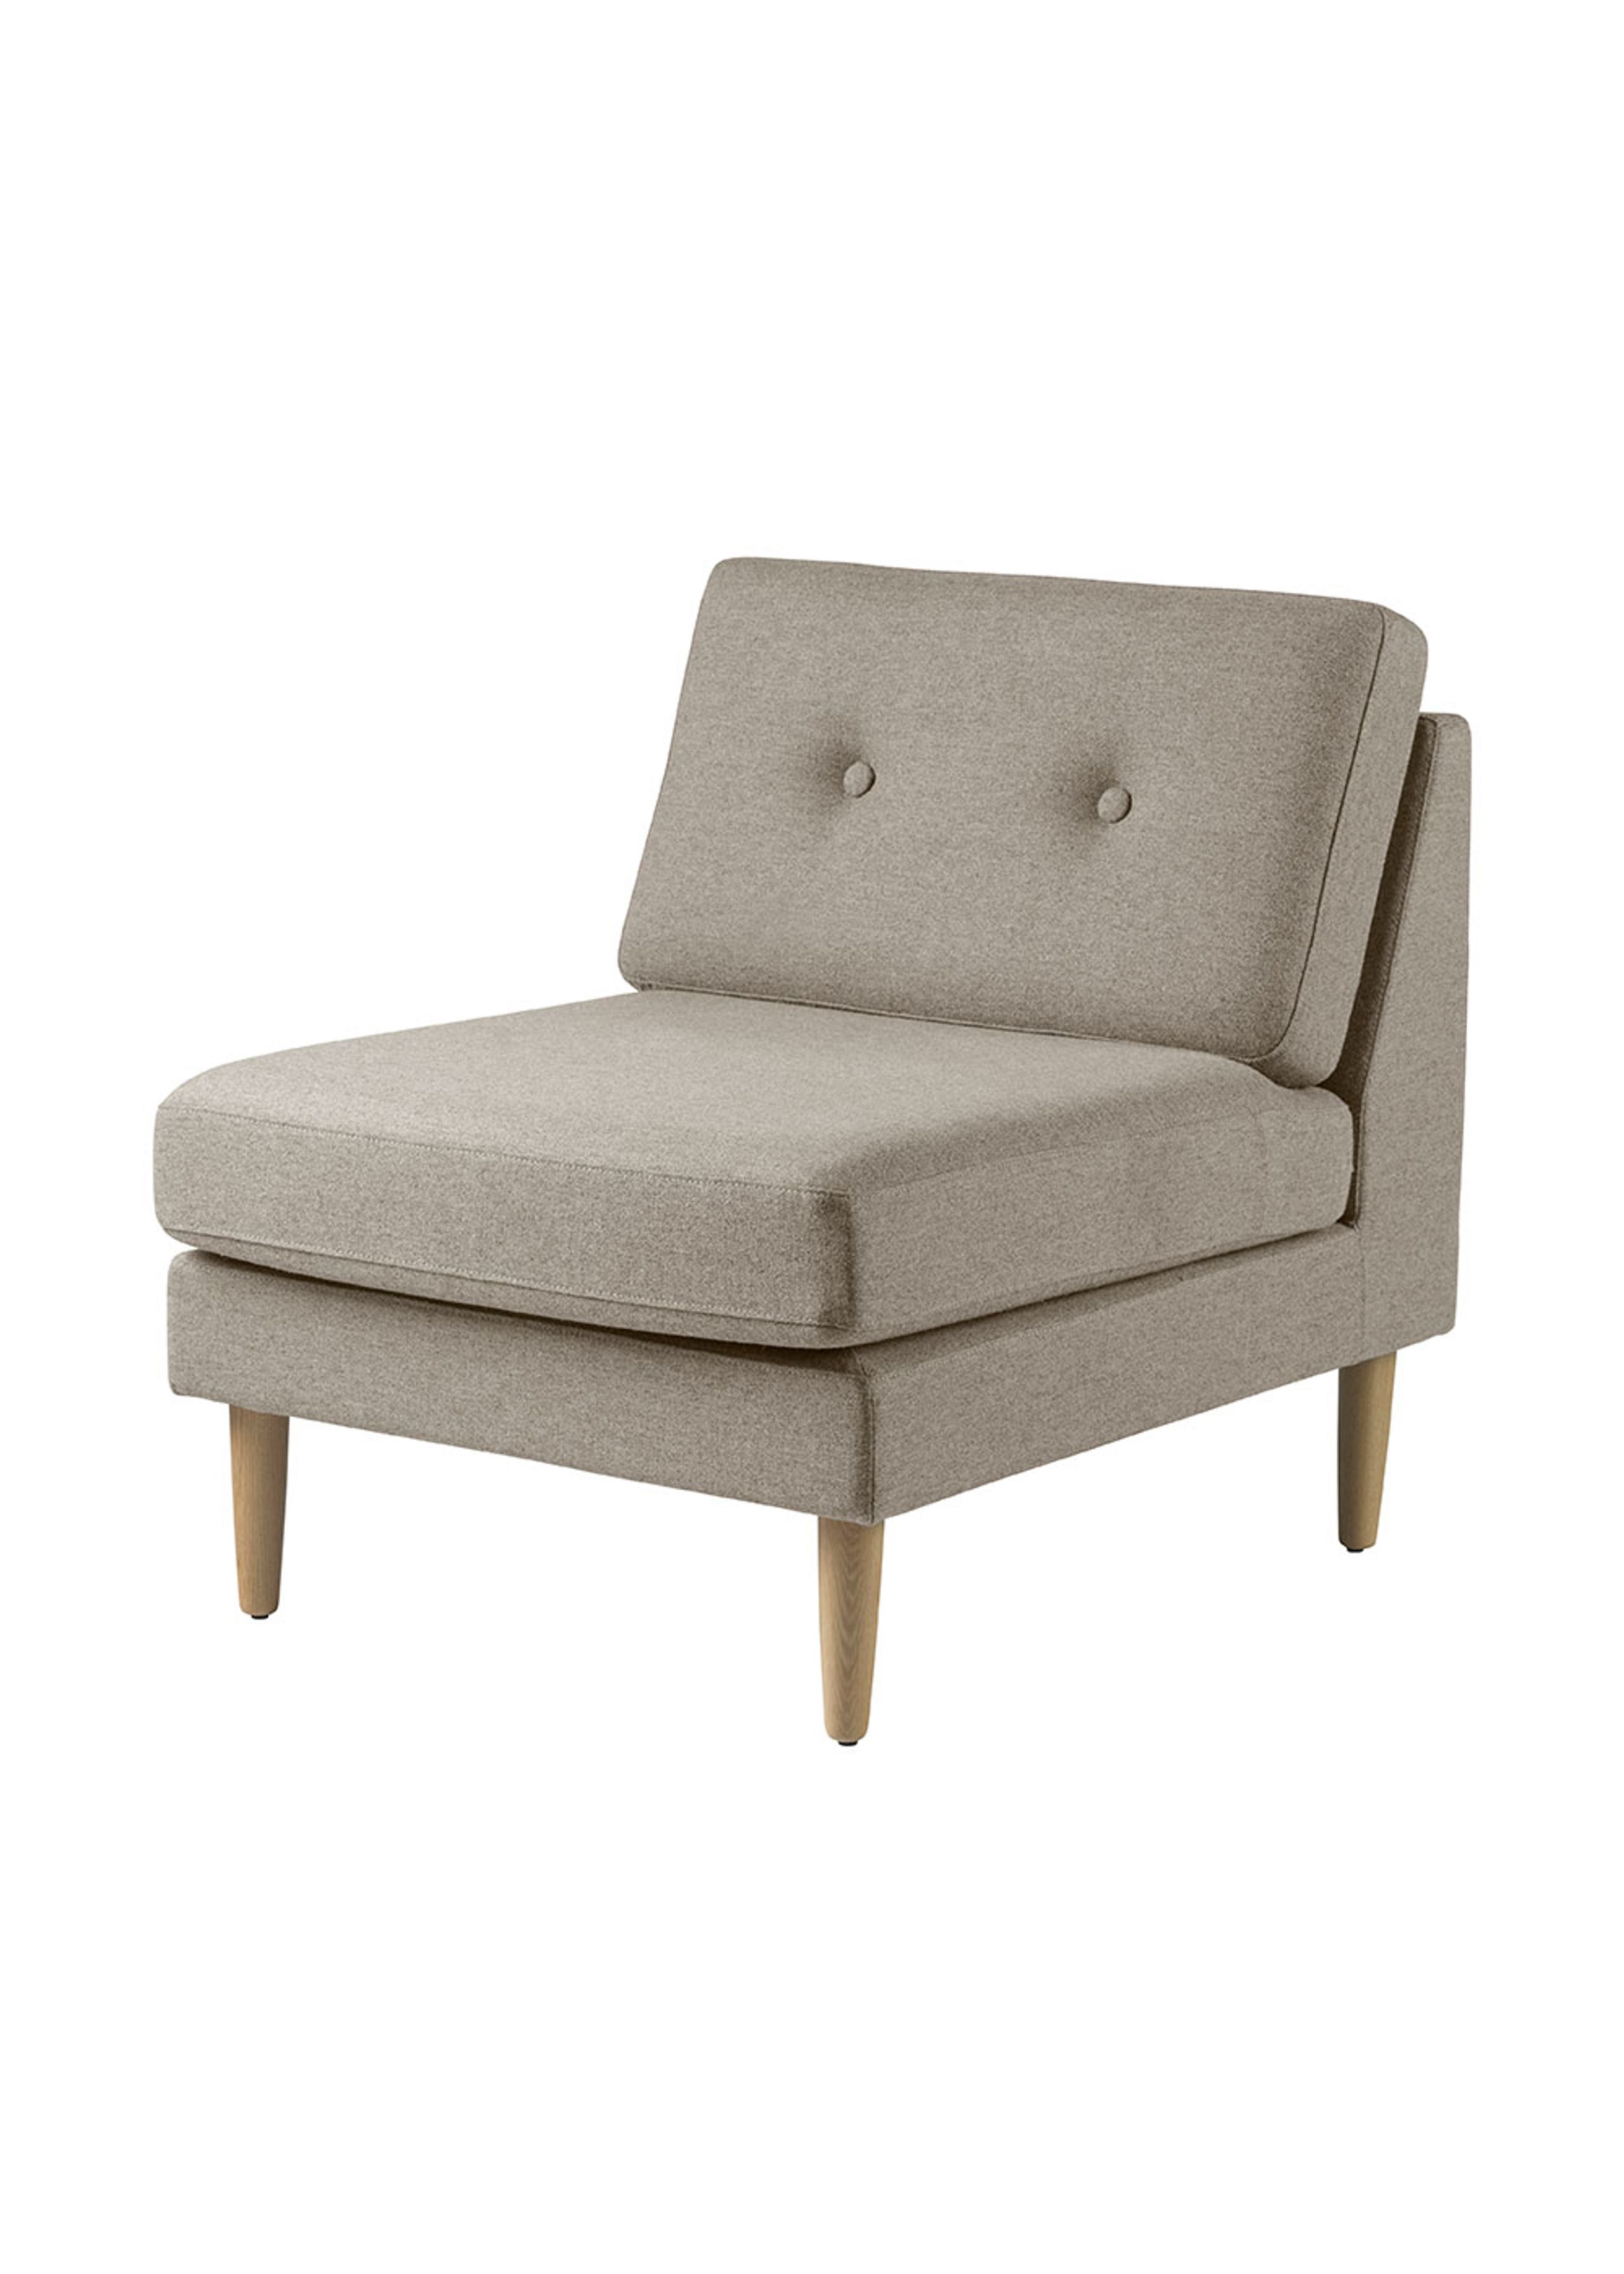 FDB Møbler / Furniture - Couch - L42 - Firhøj, Middle Module - Eg - Beige (Upminster), Main Line Flax